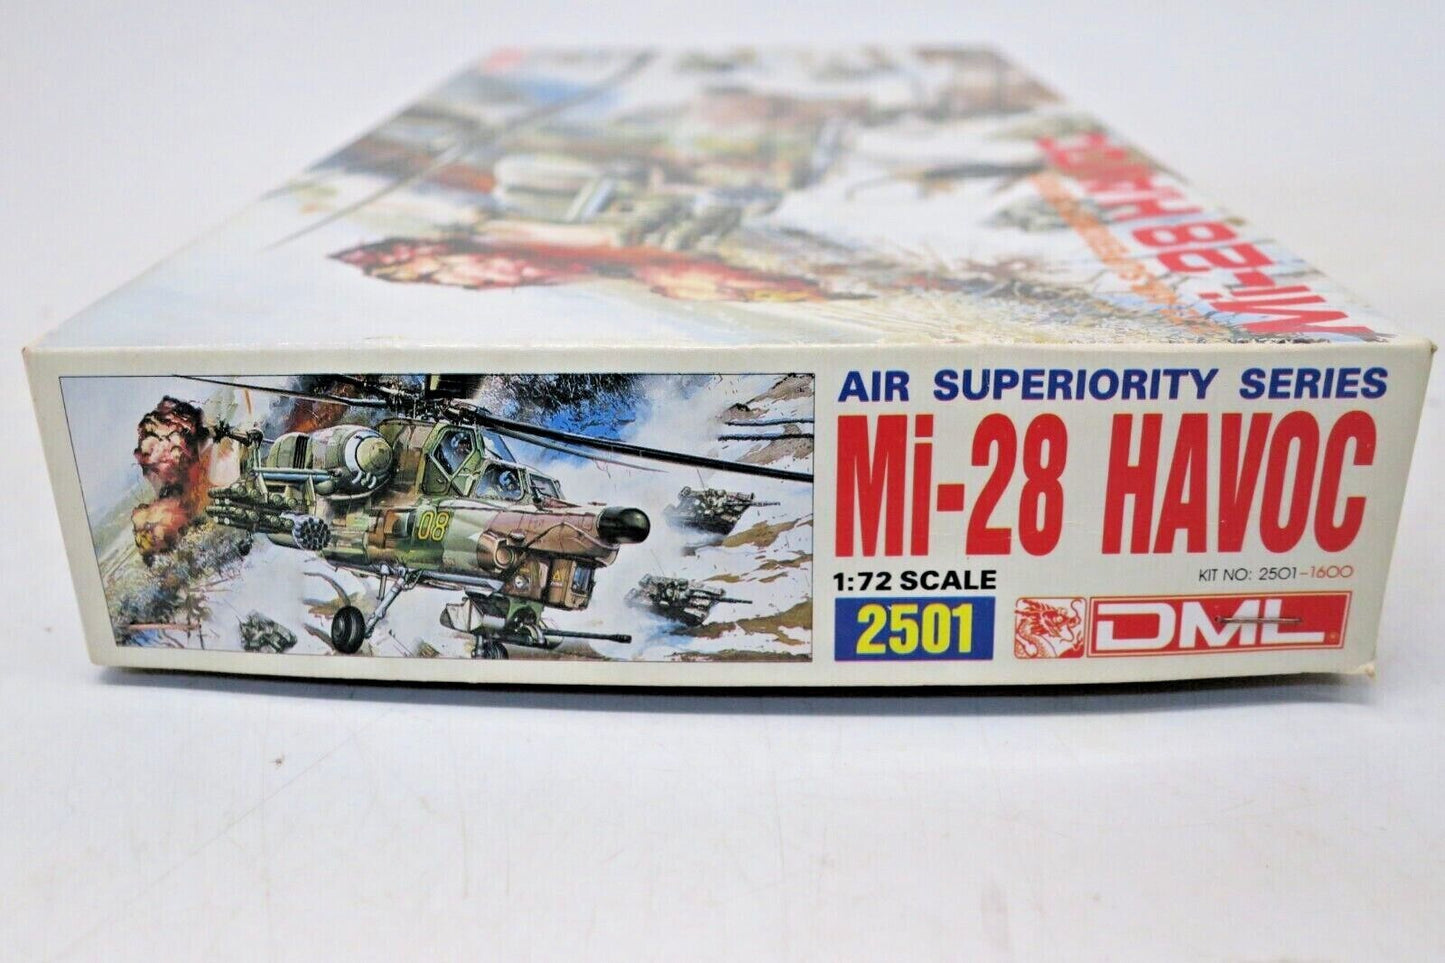 DRAGON DML 1:72 AIR SUPERIORITY SERIES MI-28 HAVOC HELICOPTER PLASTIC KIT #2501